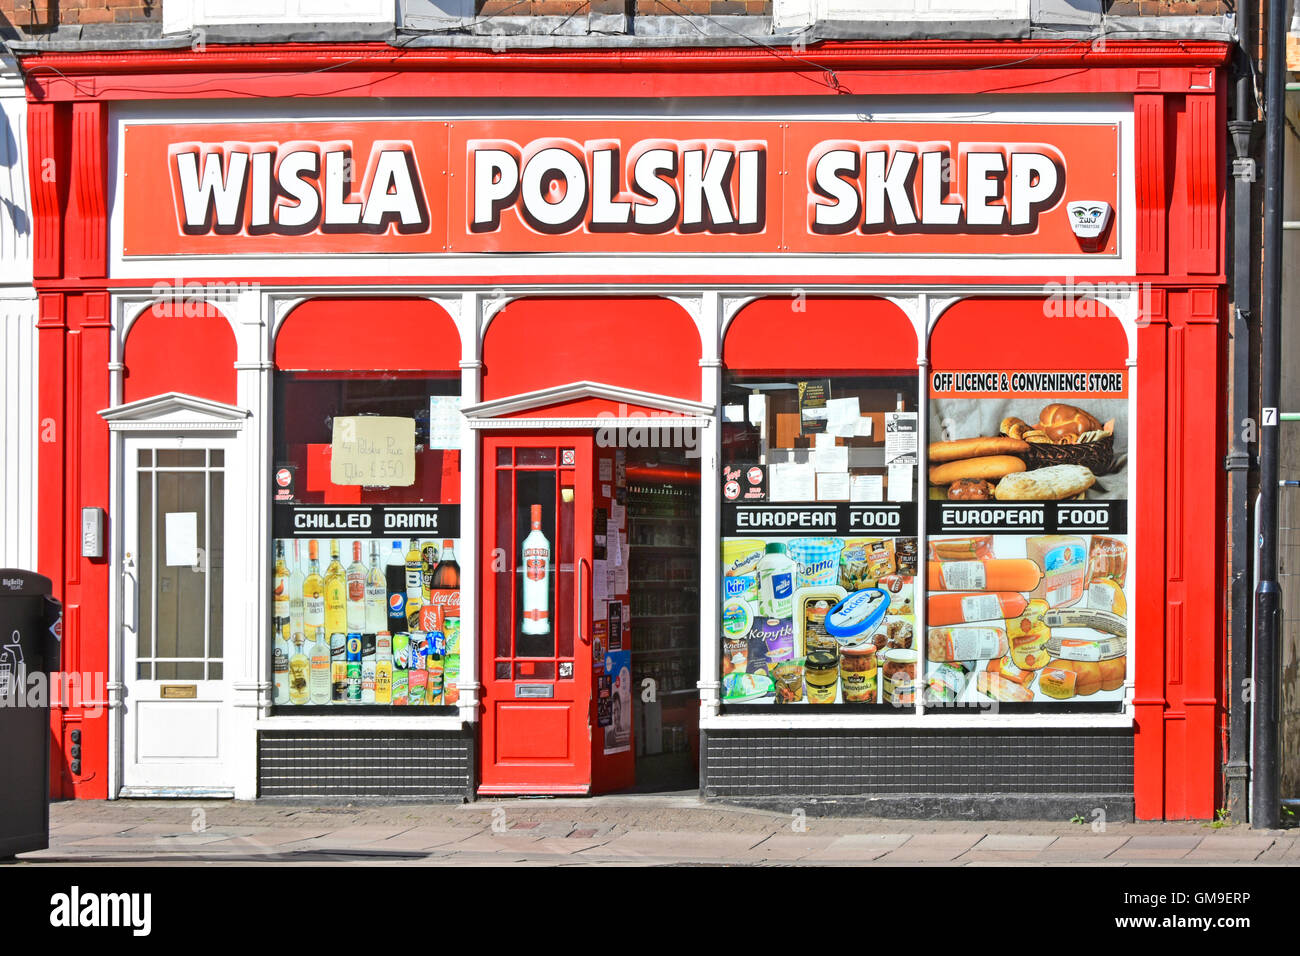 polski-sklep-polish-shop-off-license-and-convenience-store-shop-front-GM9ERP.jpg